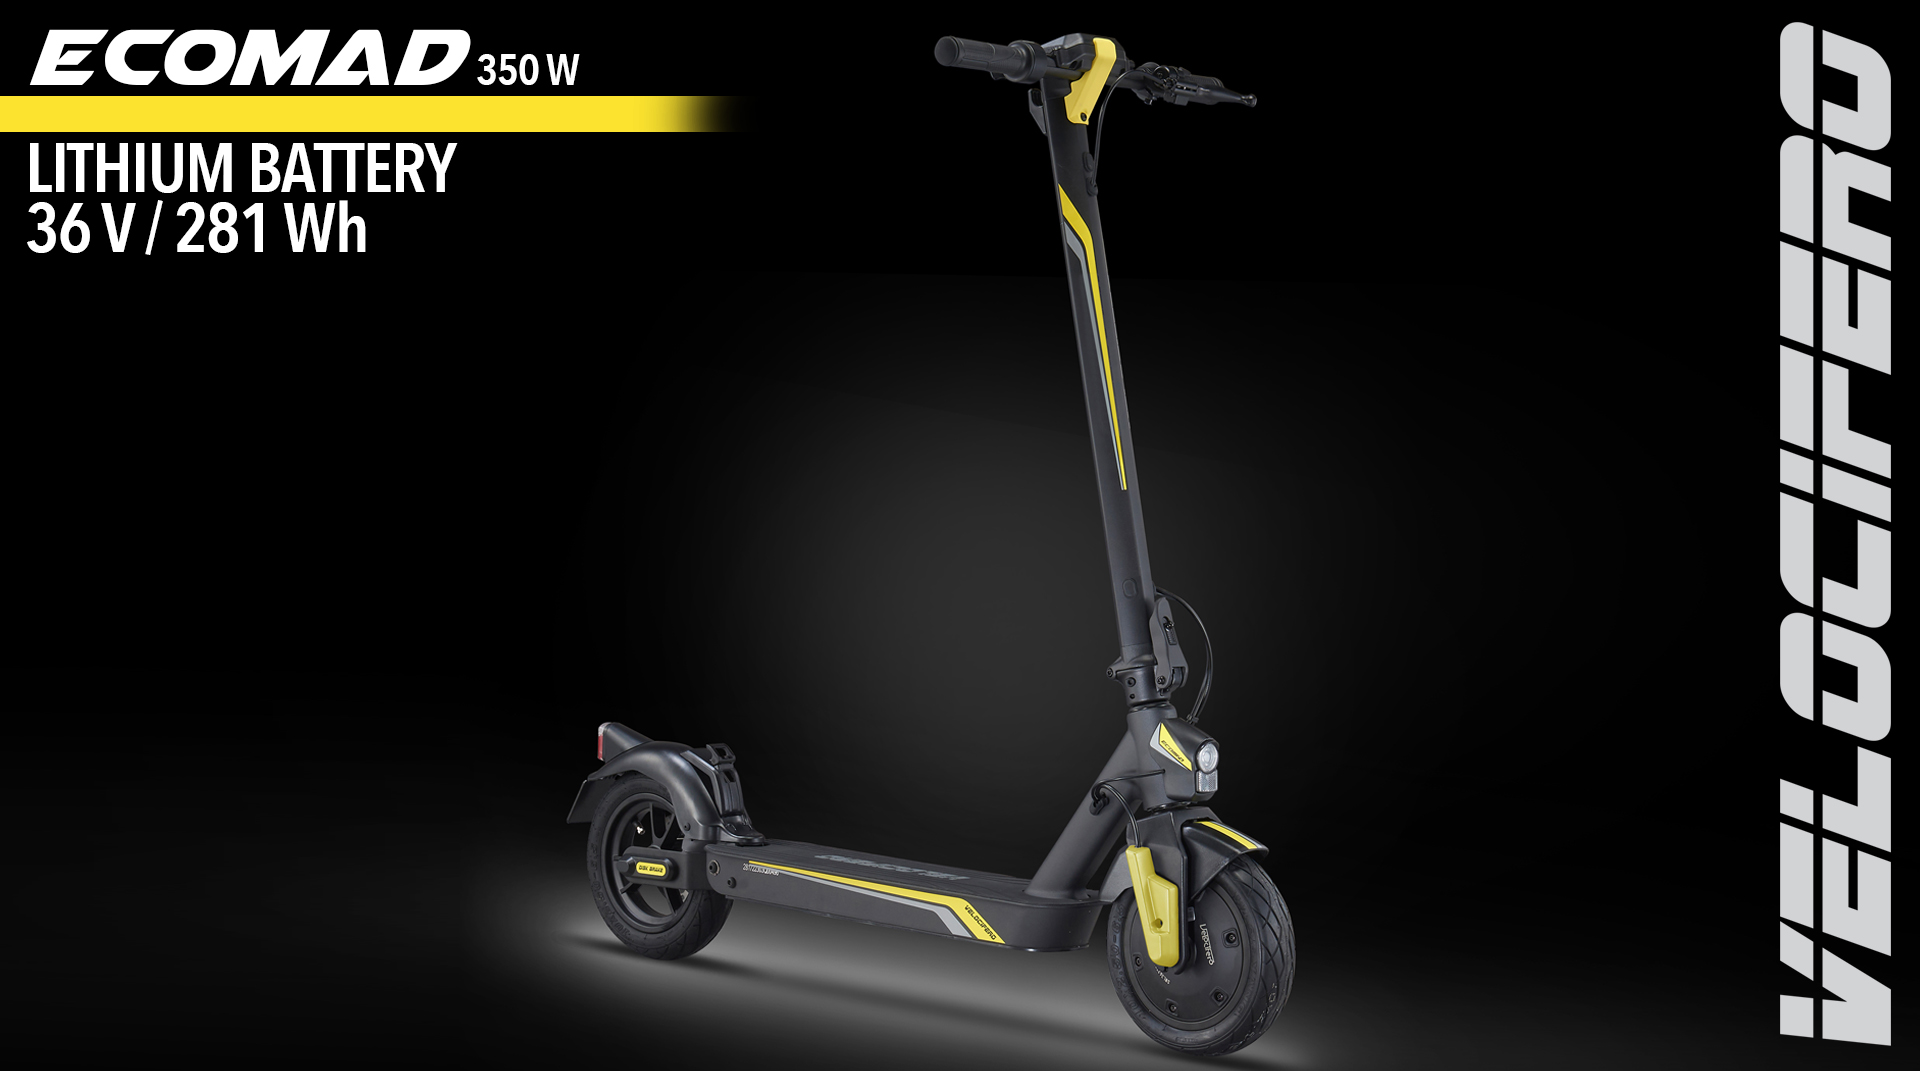 Eco Mad 350w electric kick scooter velocifero emobility alessandro tartarini designer